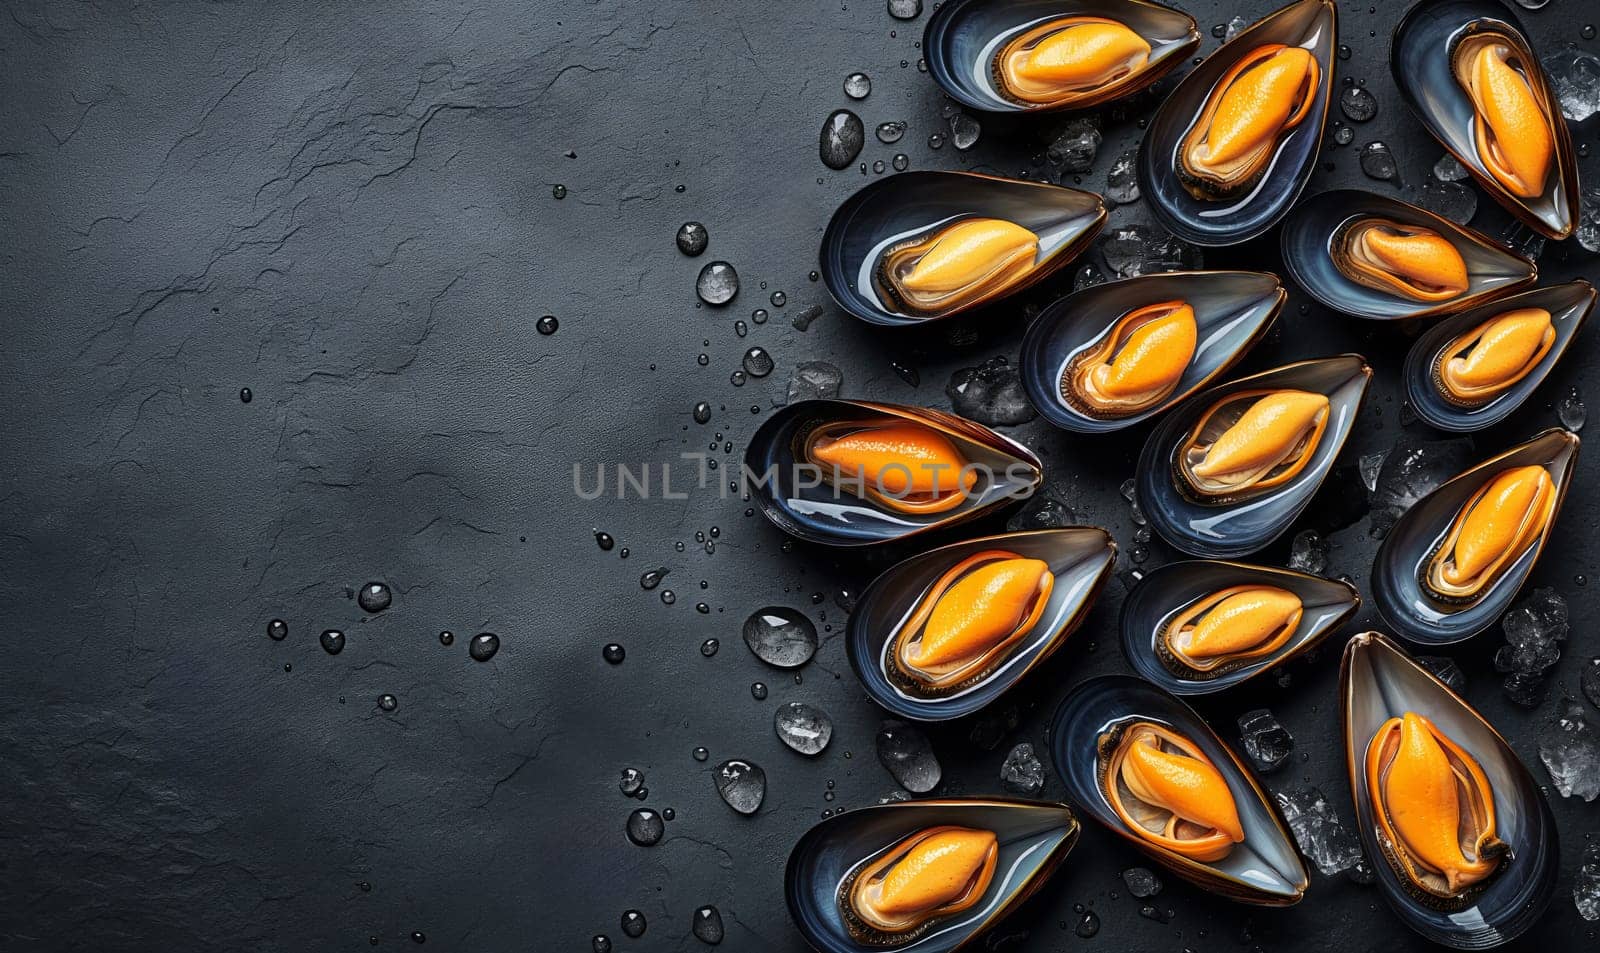 Mussels on a dark background top view. by Fischeron